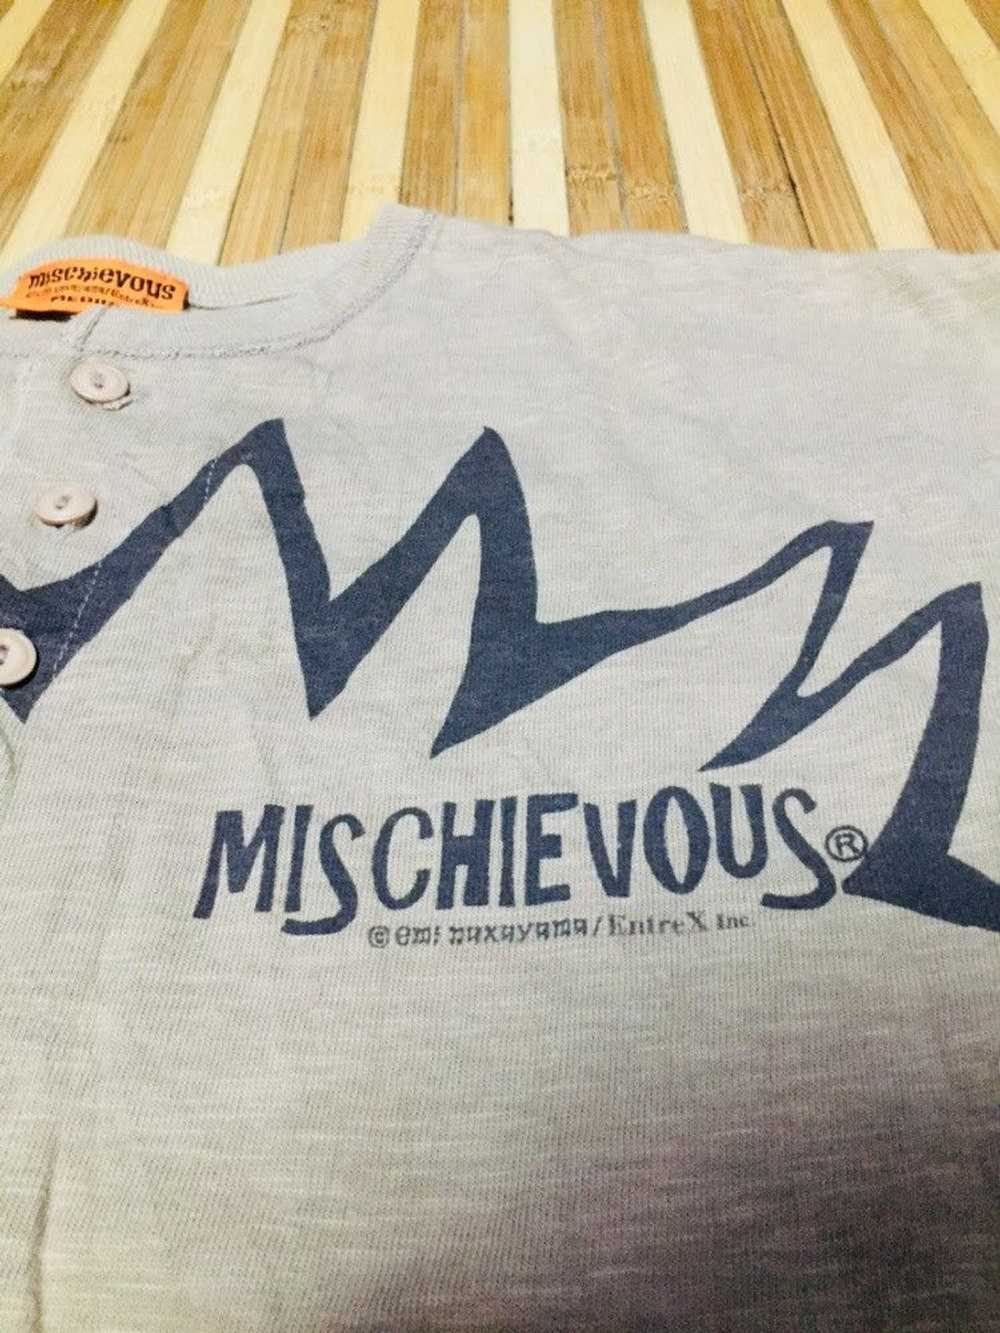 Japanese Brand Mischievous x vintage t shirt - image 4